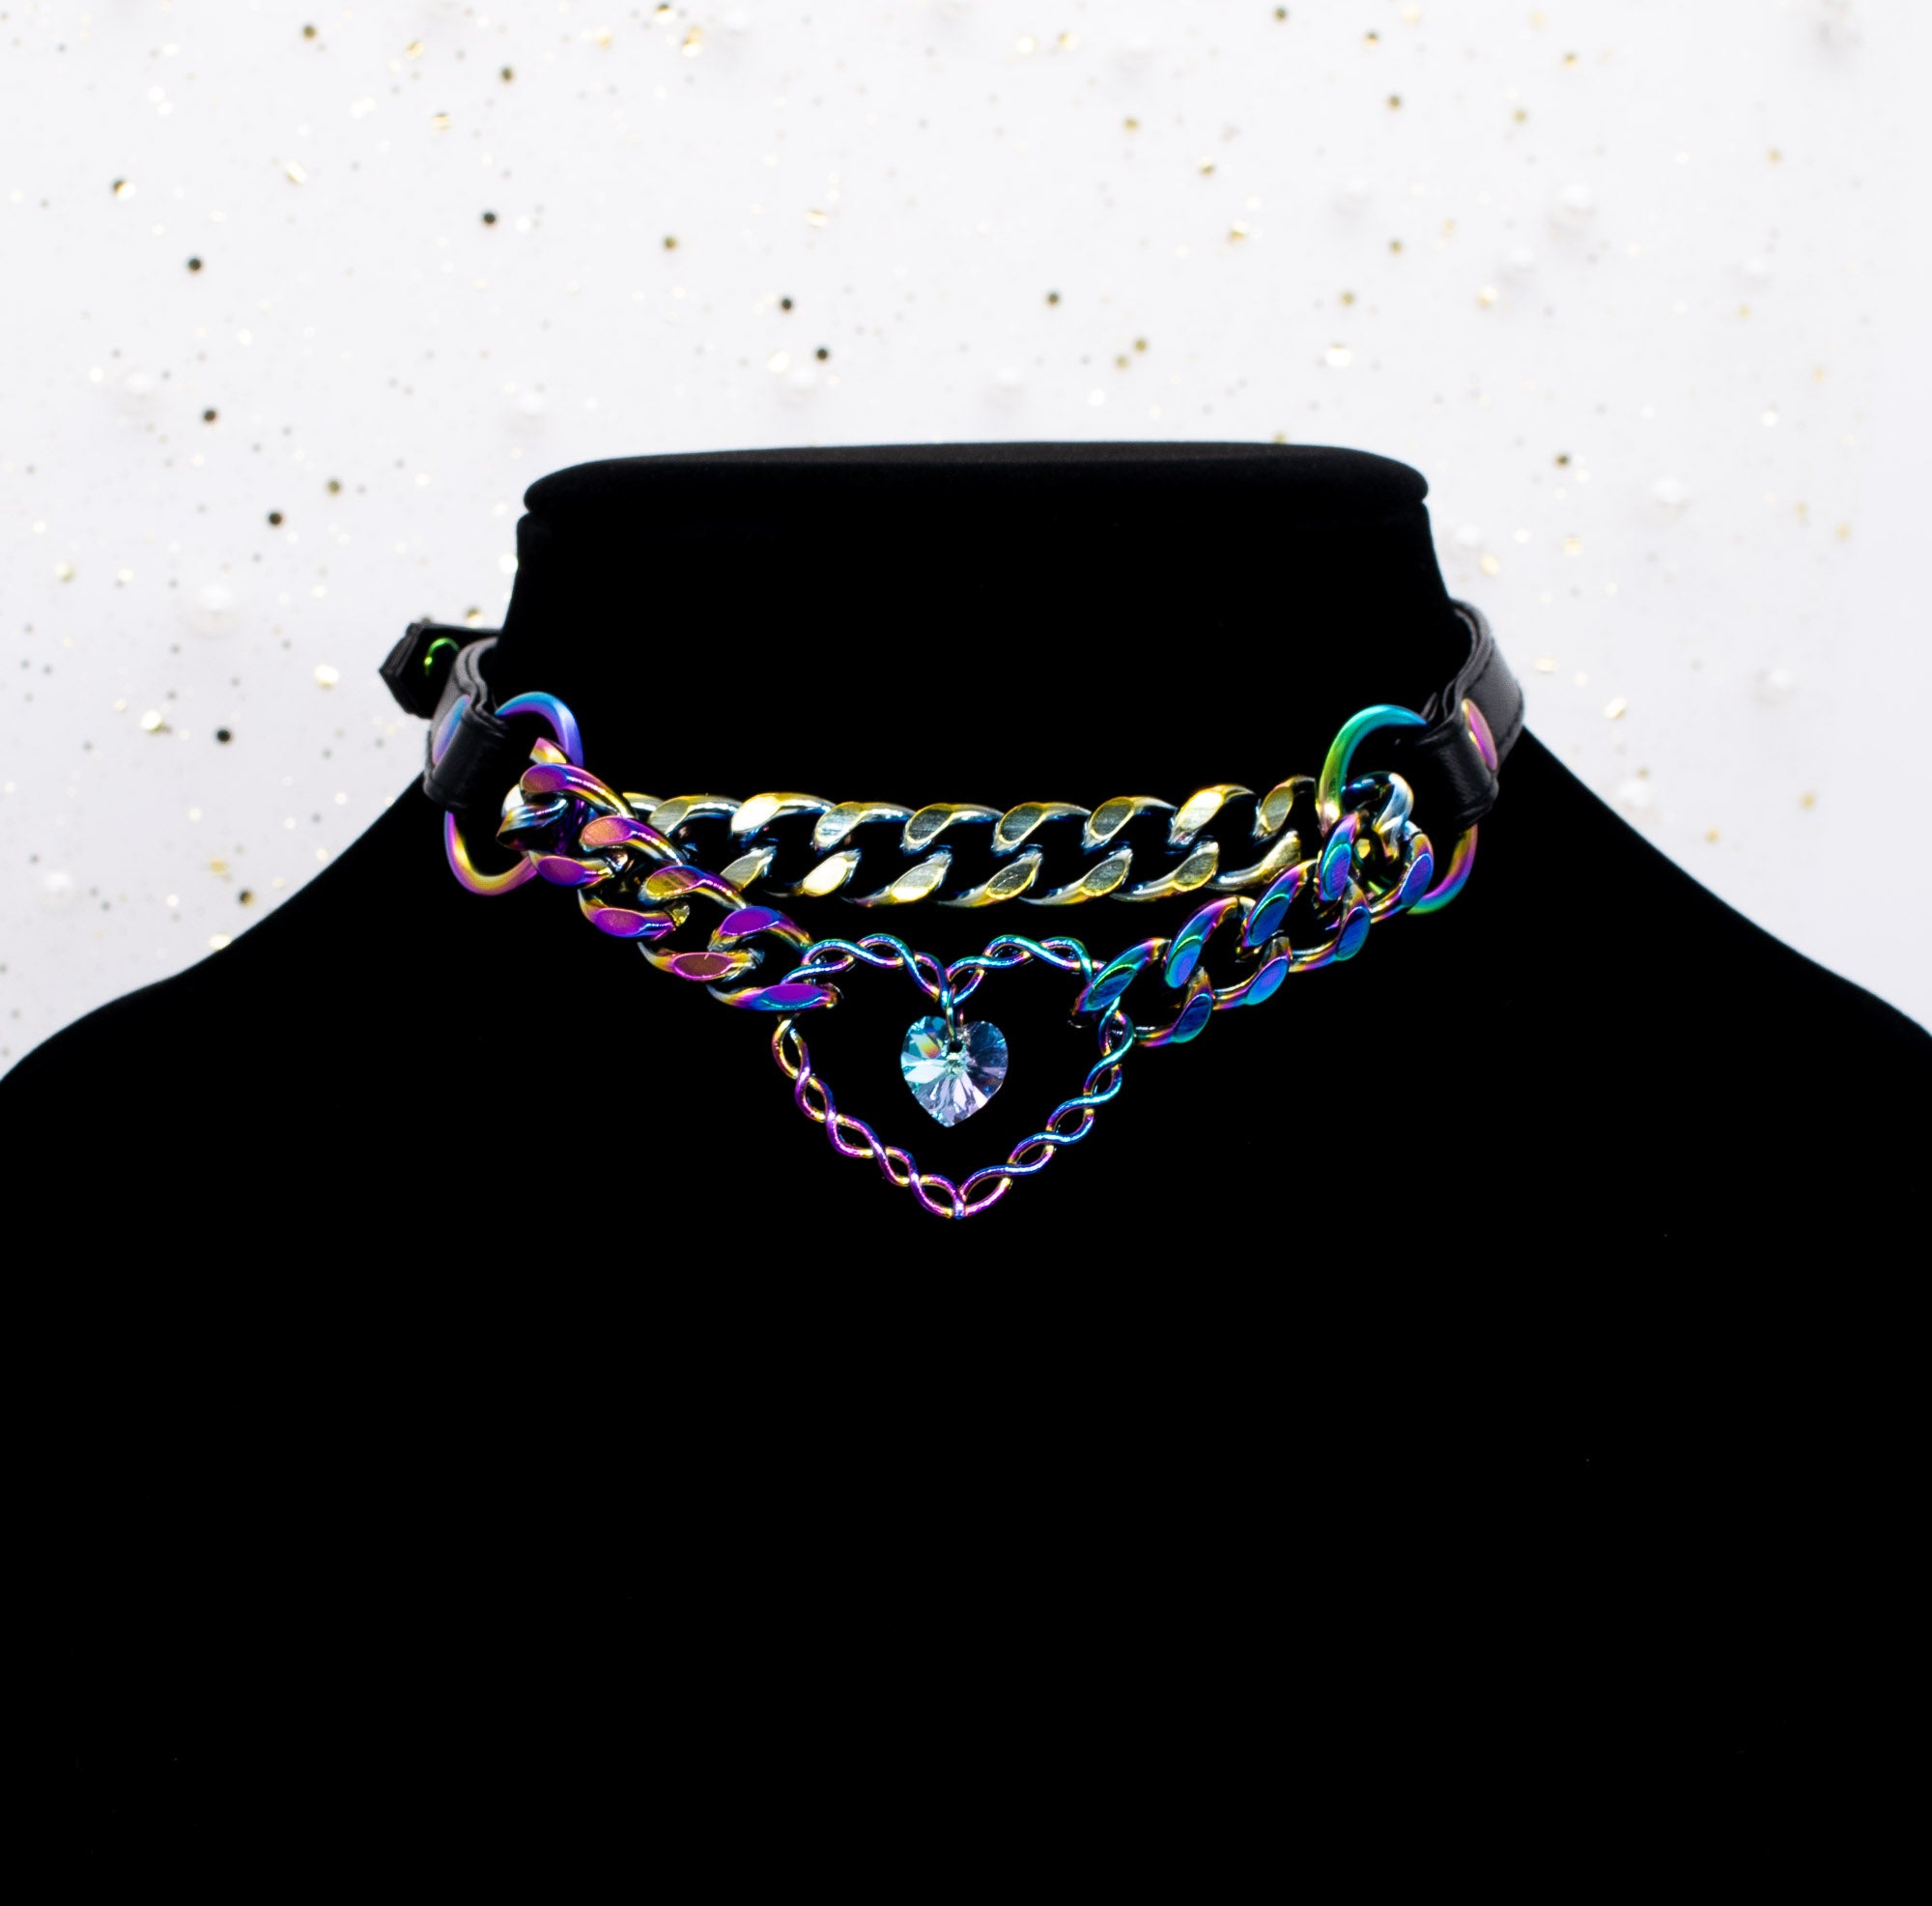 Swarovski Heart Ring Black Vegan Leather Martingale Collar in Rainbow